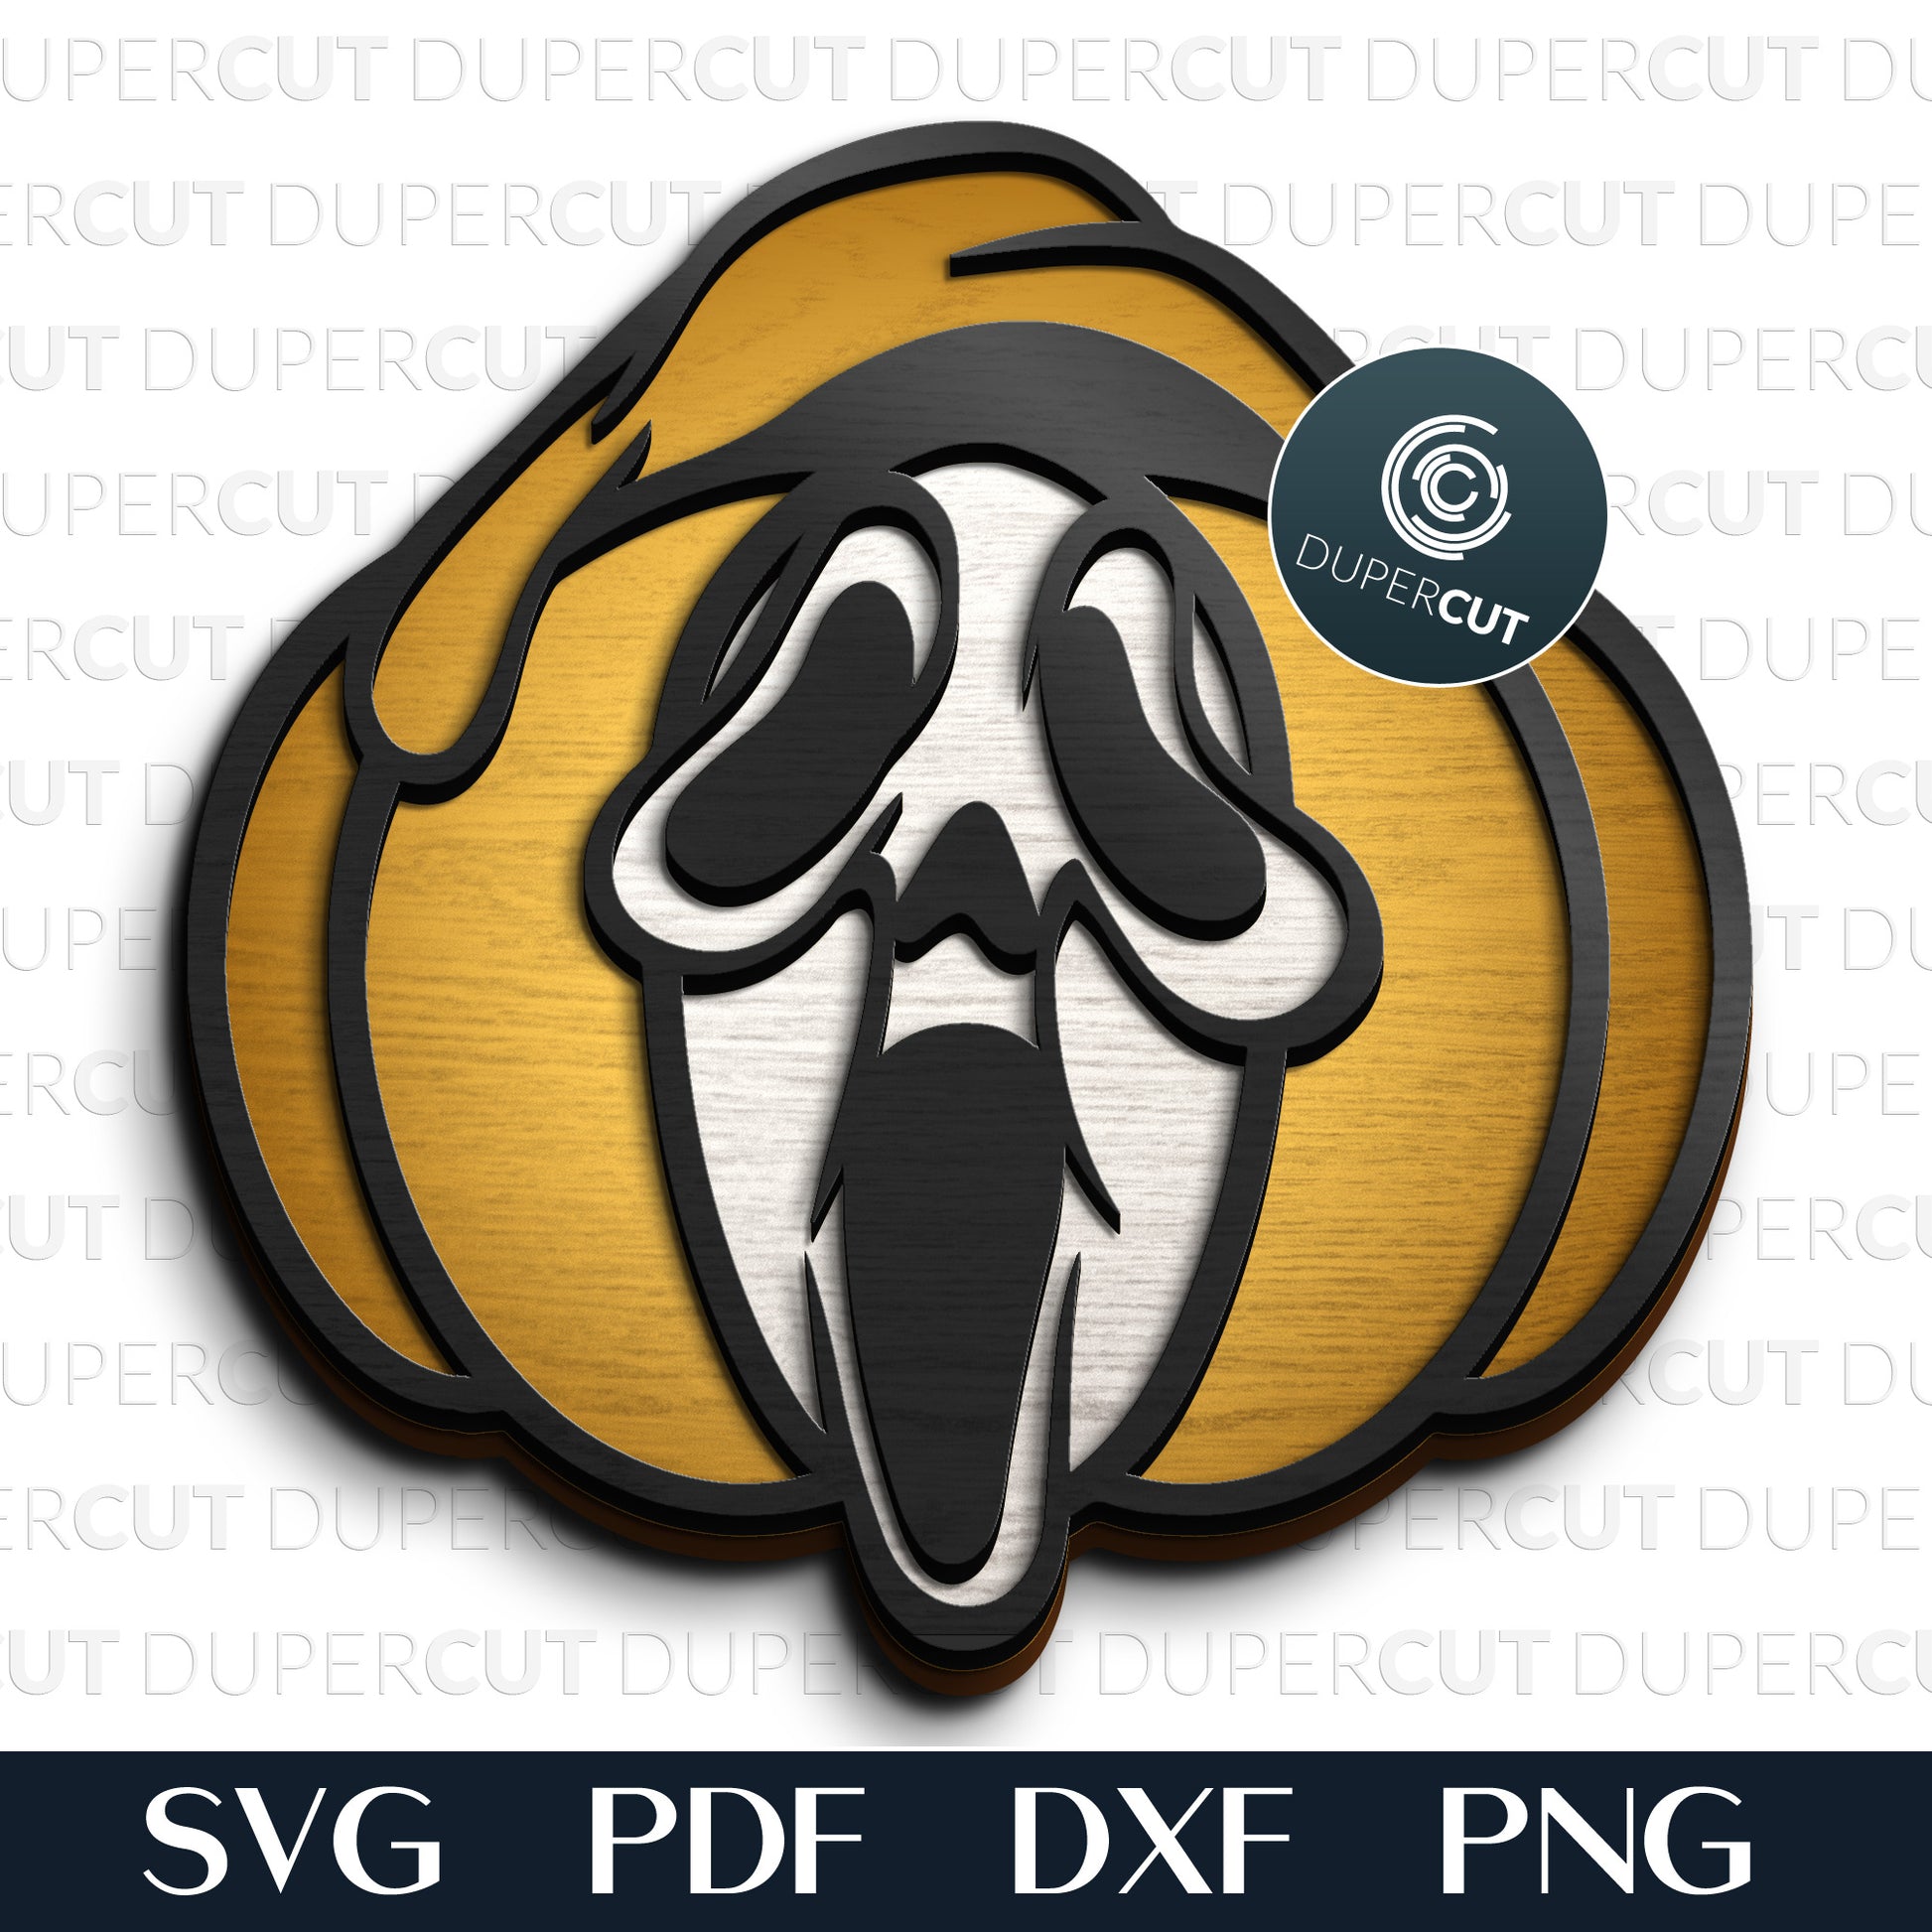 Scream mask pumpkin Halloween decoration - SVG PNG DXF vector laser cutting files for Cricut, Glowforge, Silhouette, CNC plasma machines by DuperCut